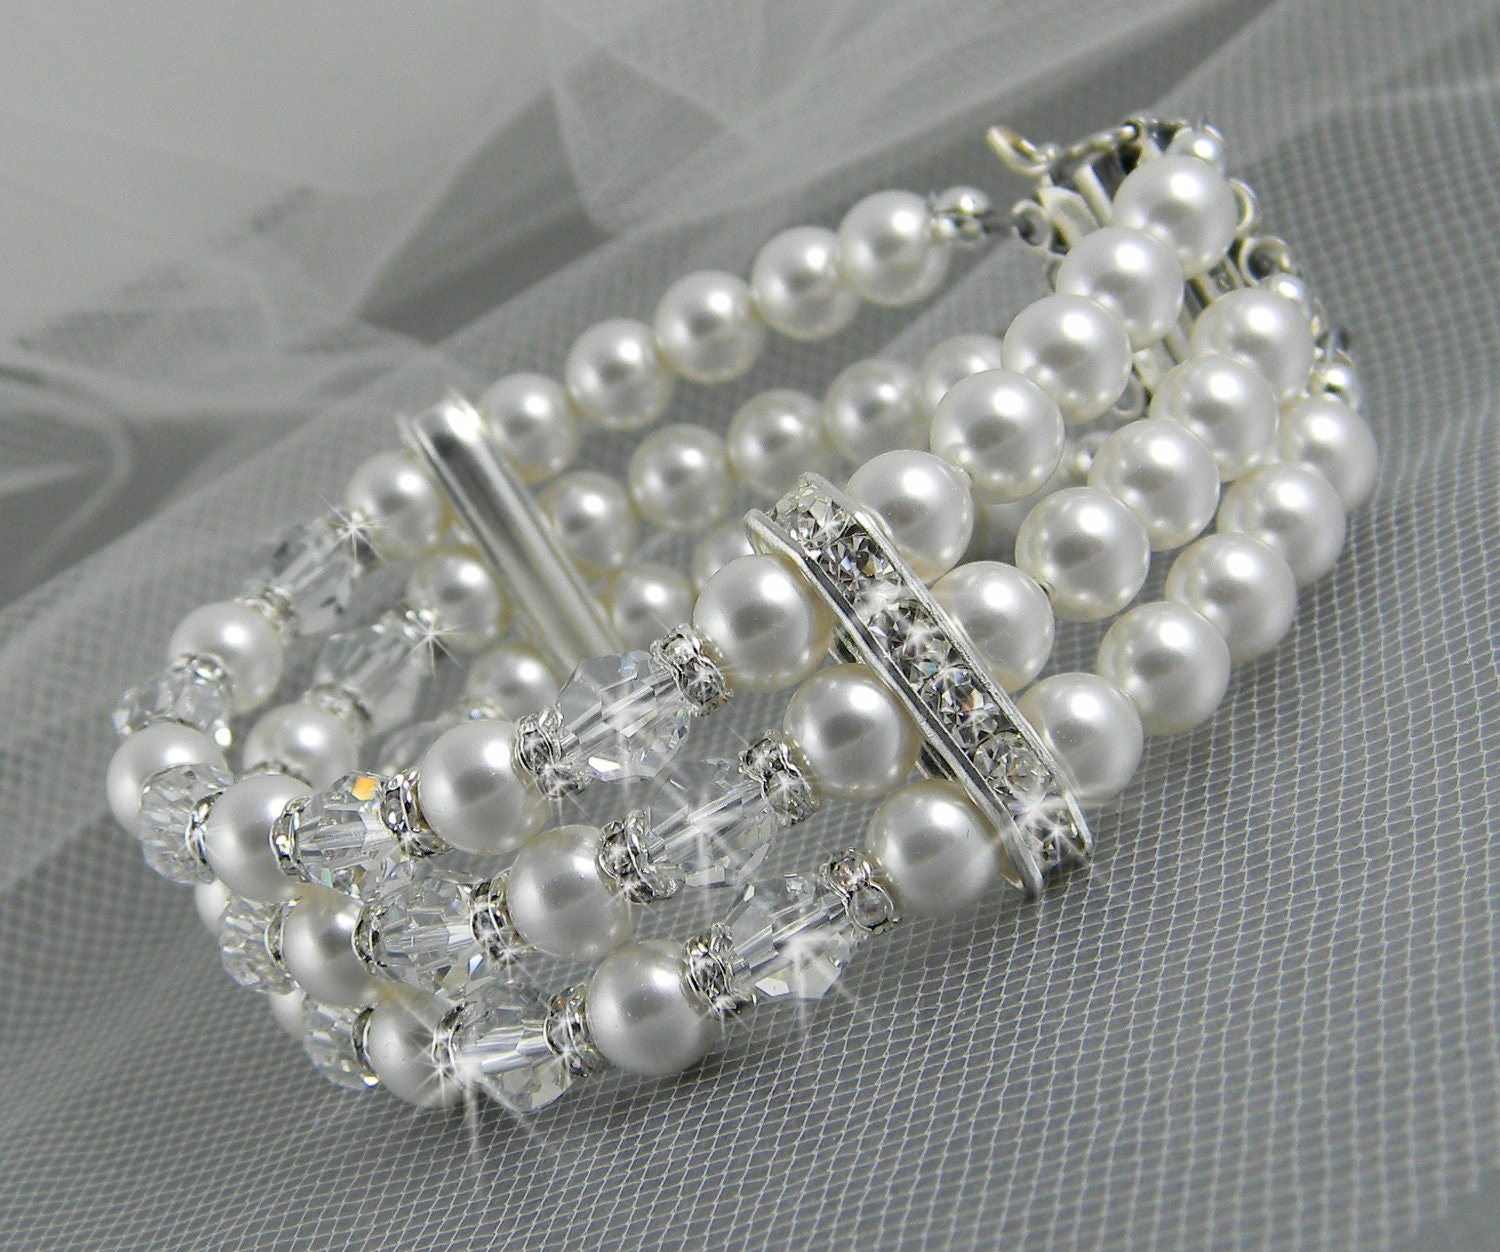 Crystal Cuff Bracelet Swarovski pearls crystals 3 strand cuff bracelet Wedding jewelry, vintage style, Tamara Cuff 3 strands